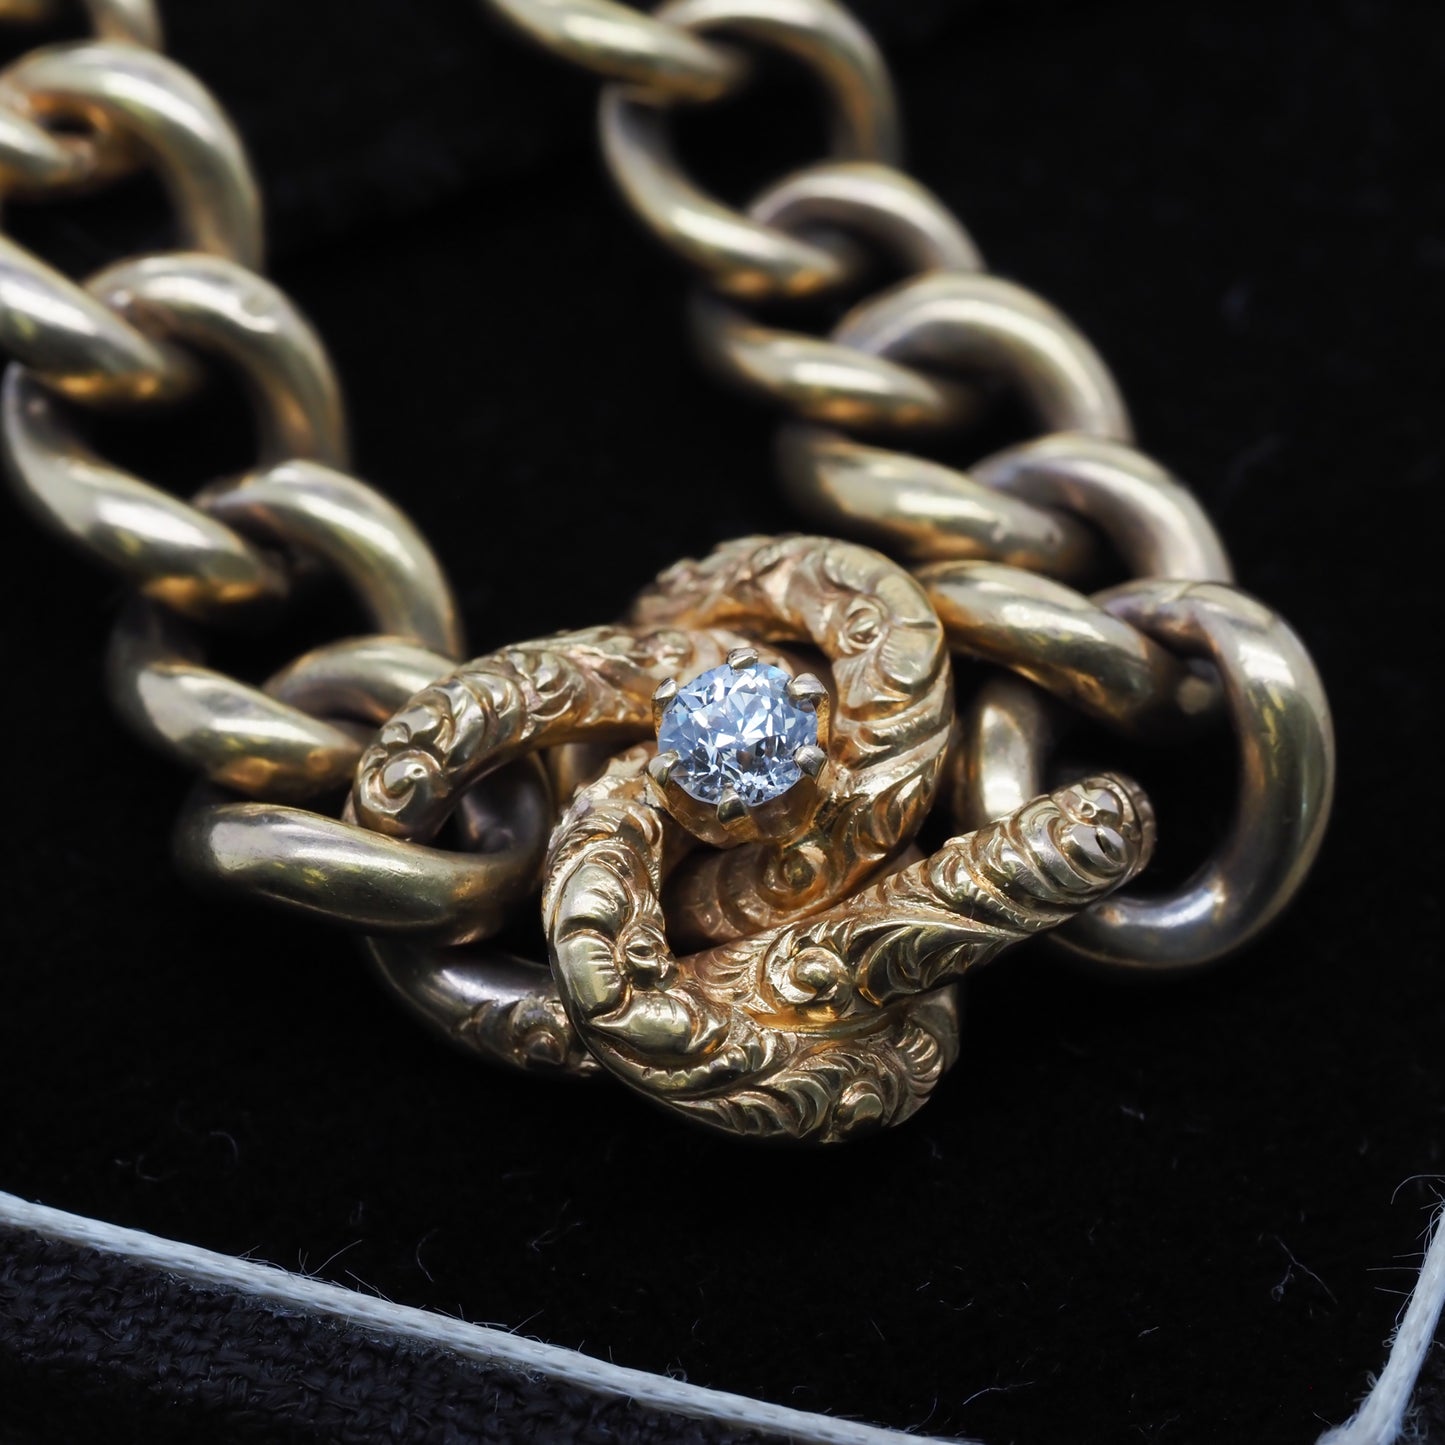 Circa 1890s Victorian Bracelet .25ct Old European Cut Diamond